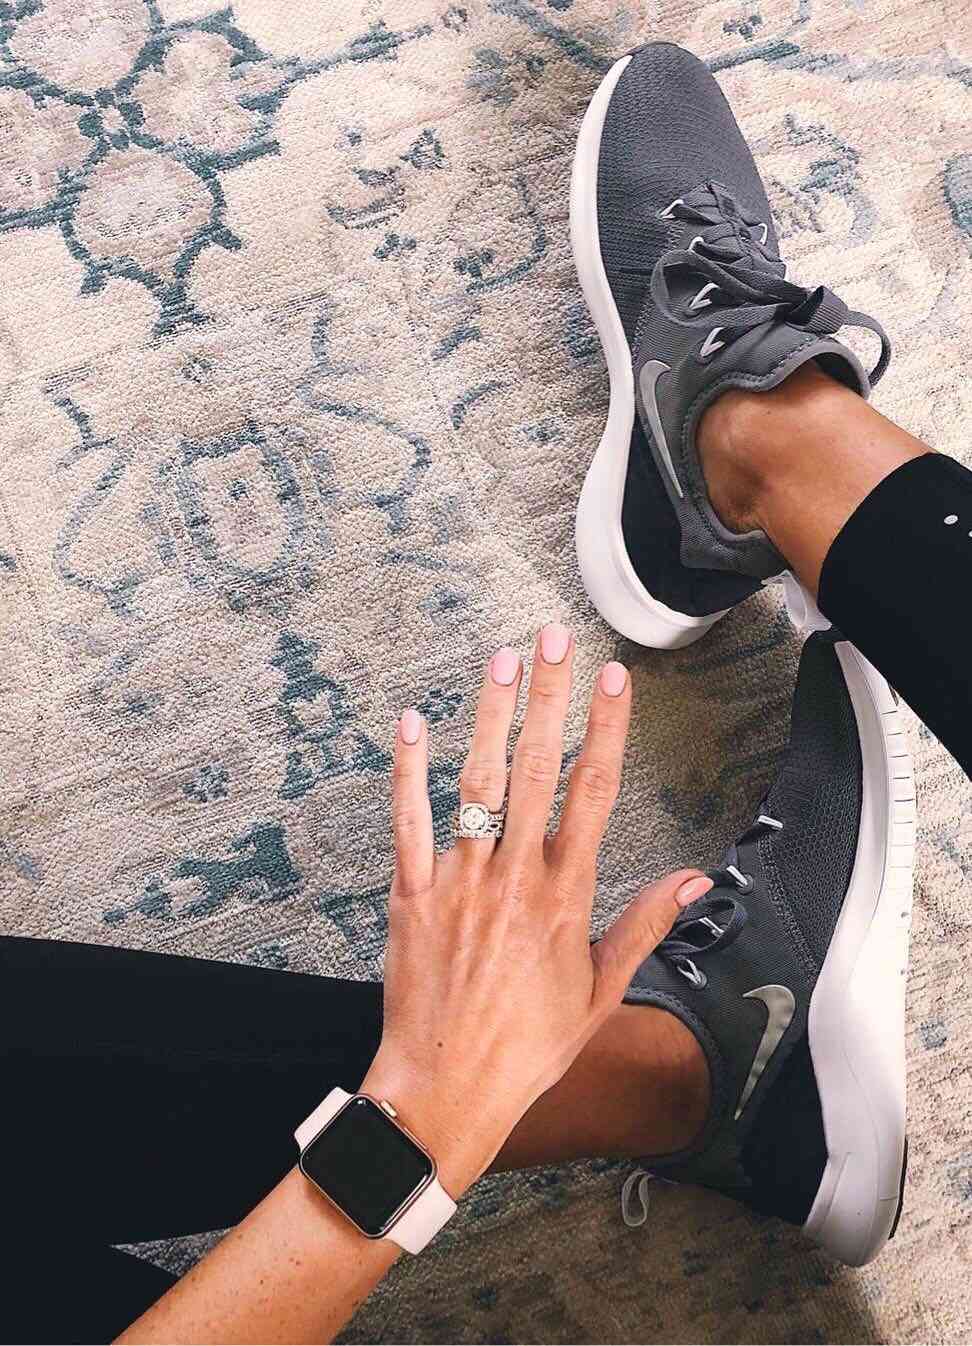 engagement ring selfie fitness attire